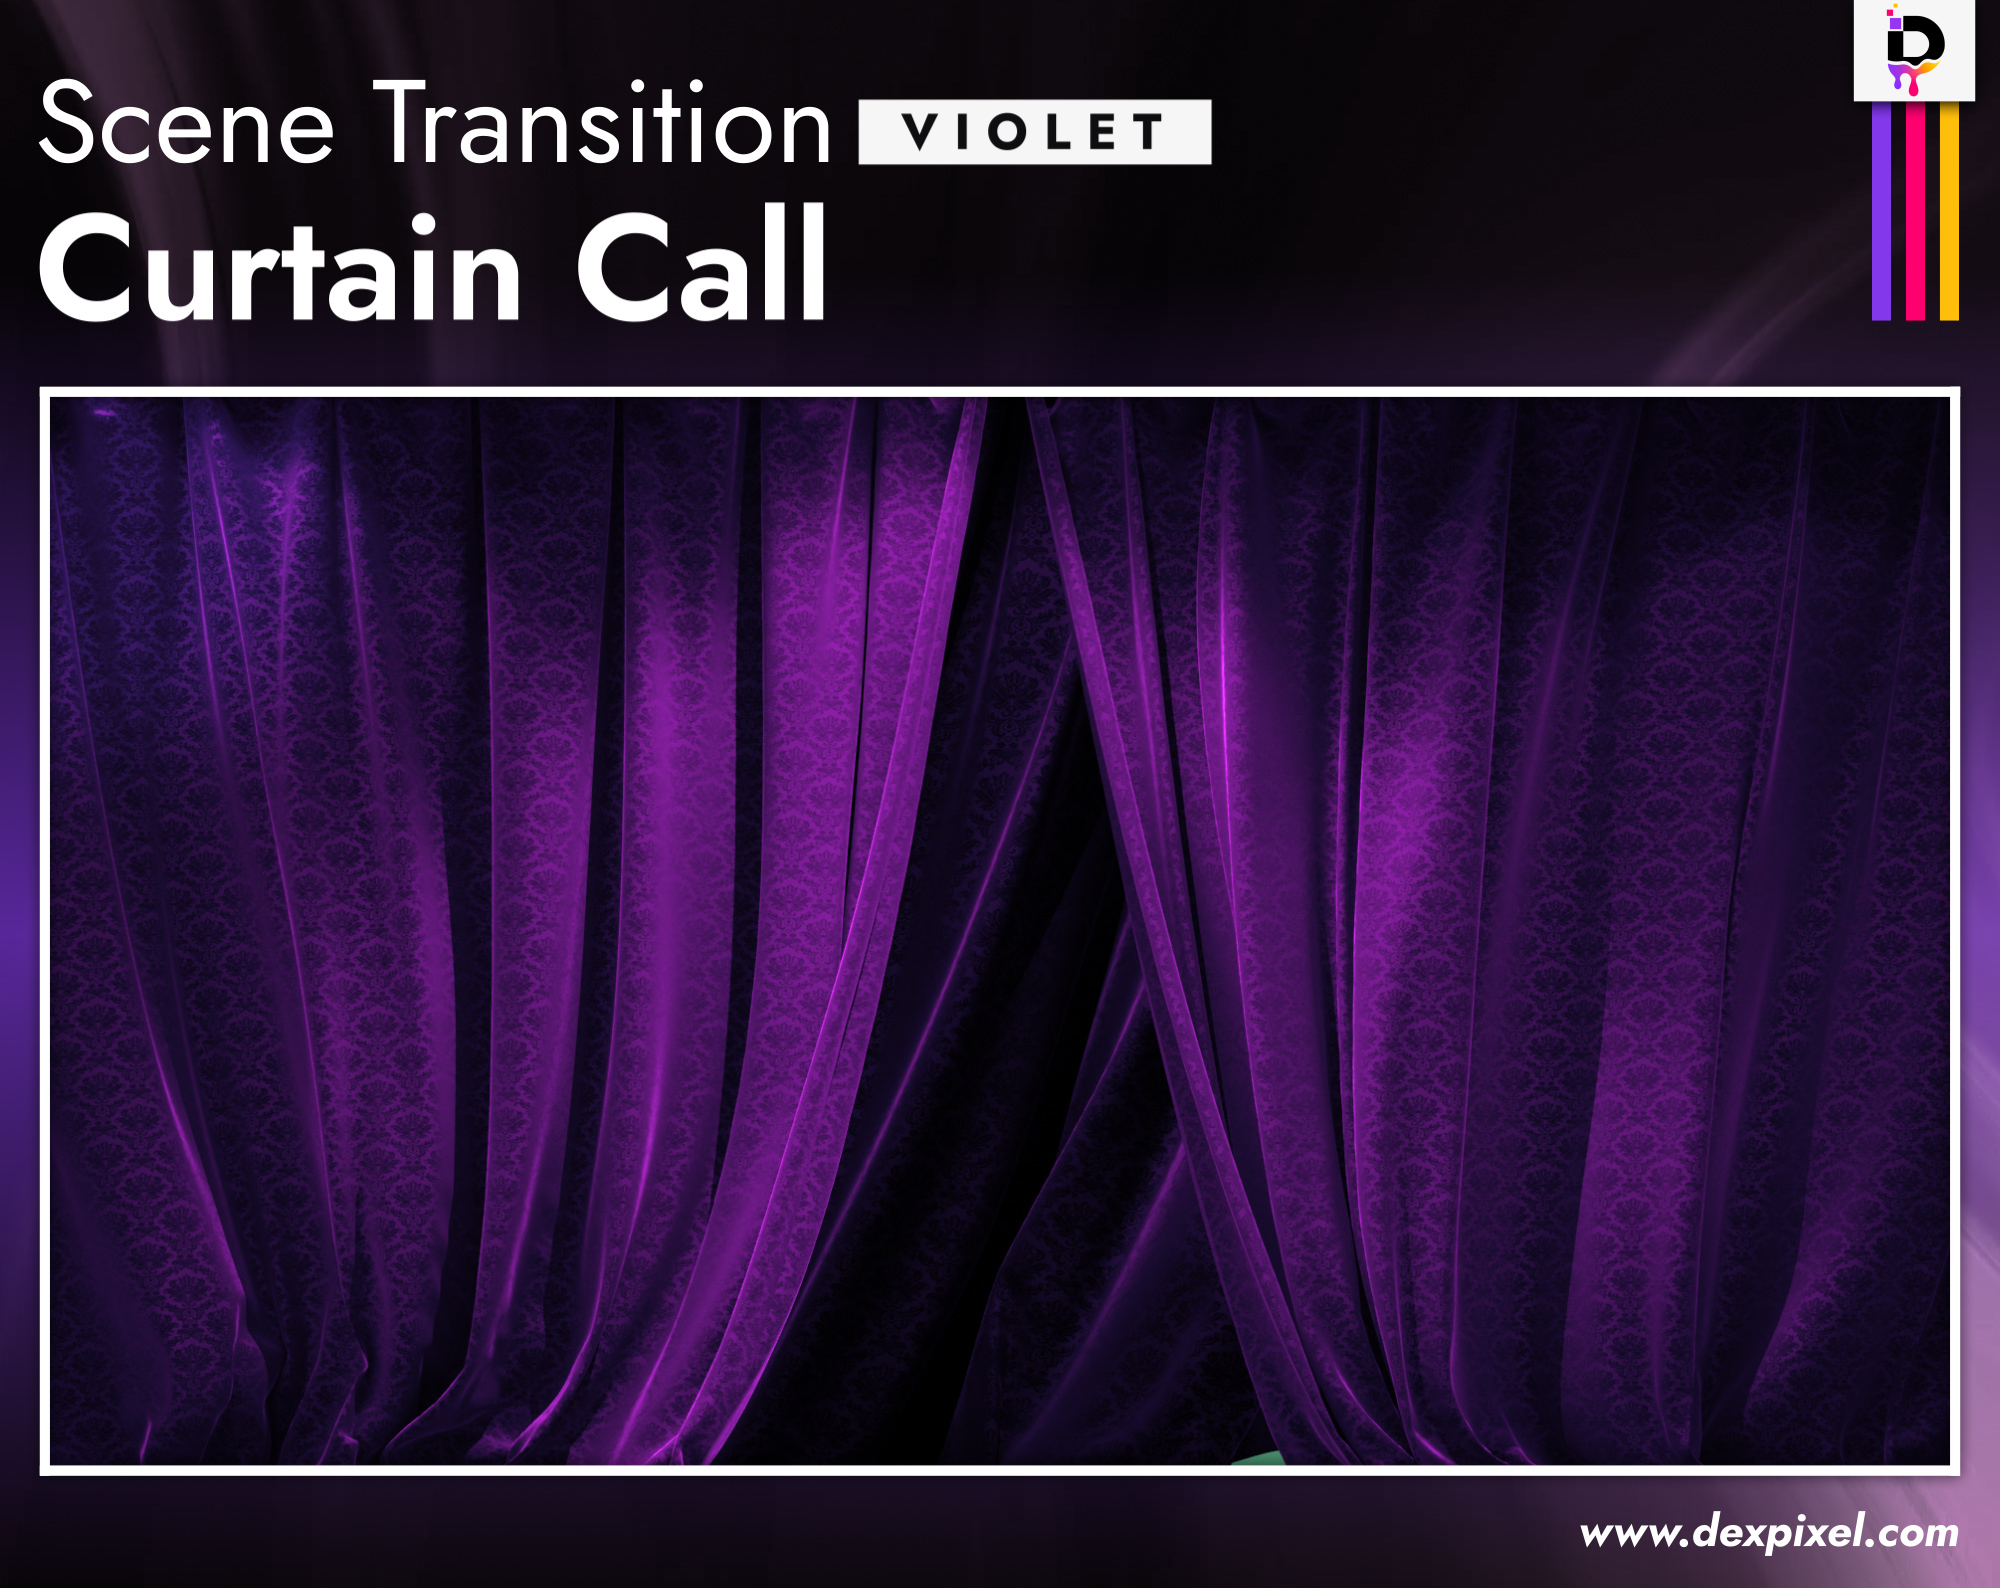 Scene Transition Dexpixel Curtain Call Violet